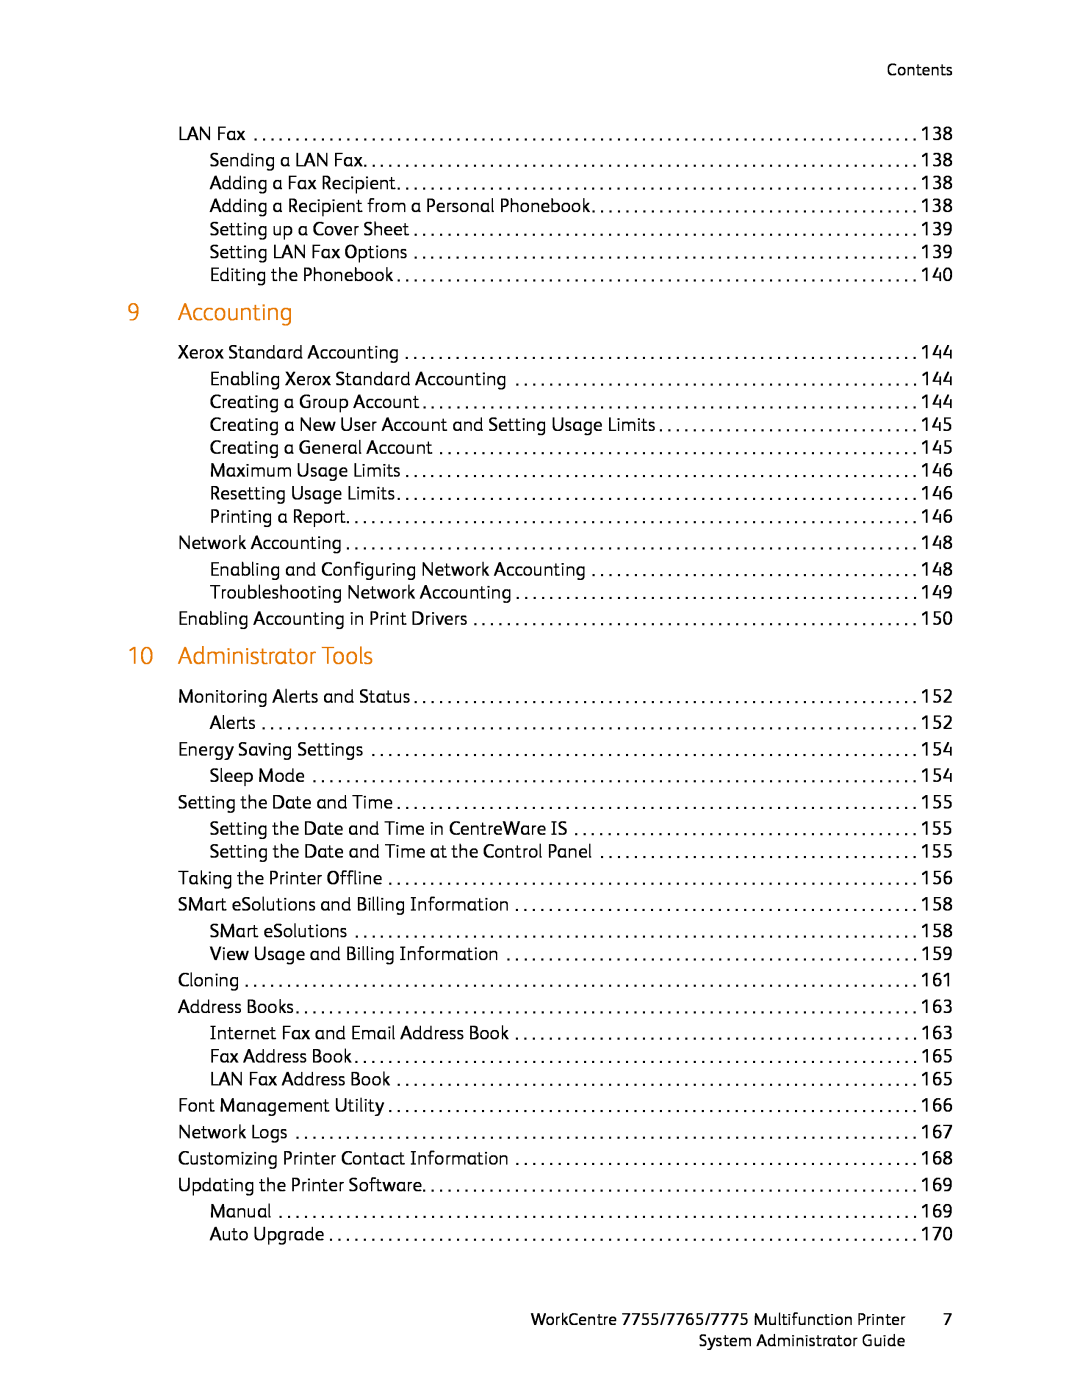 Xerox 7755, 7765, 7775 manual Accounting, Administrator Tools 